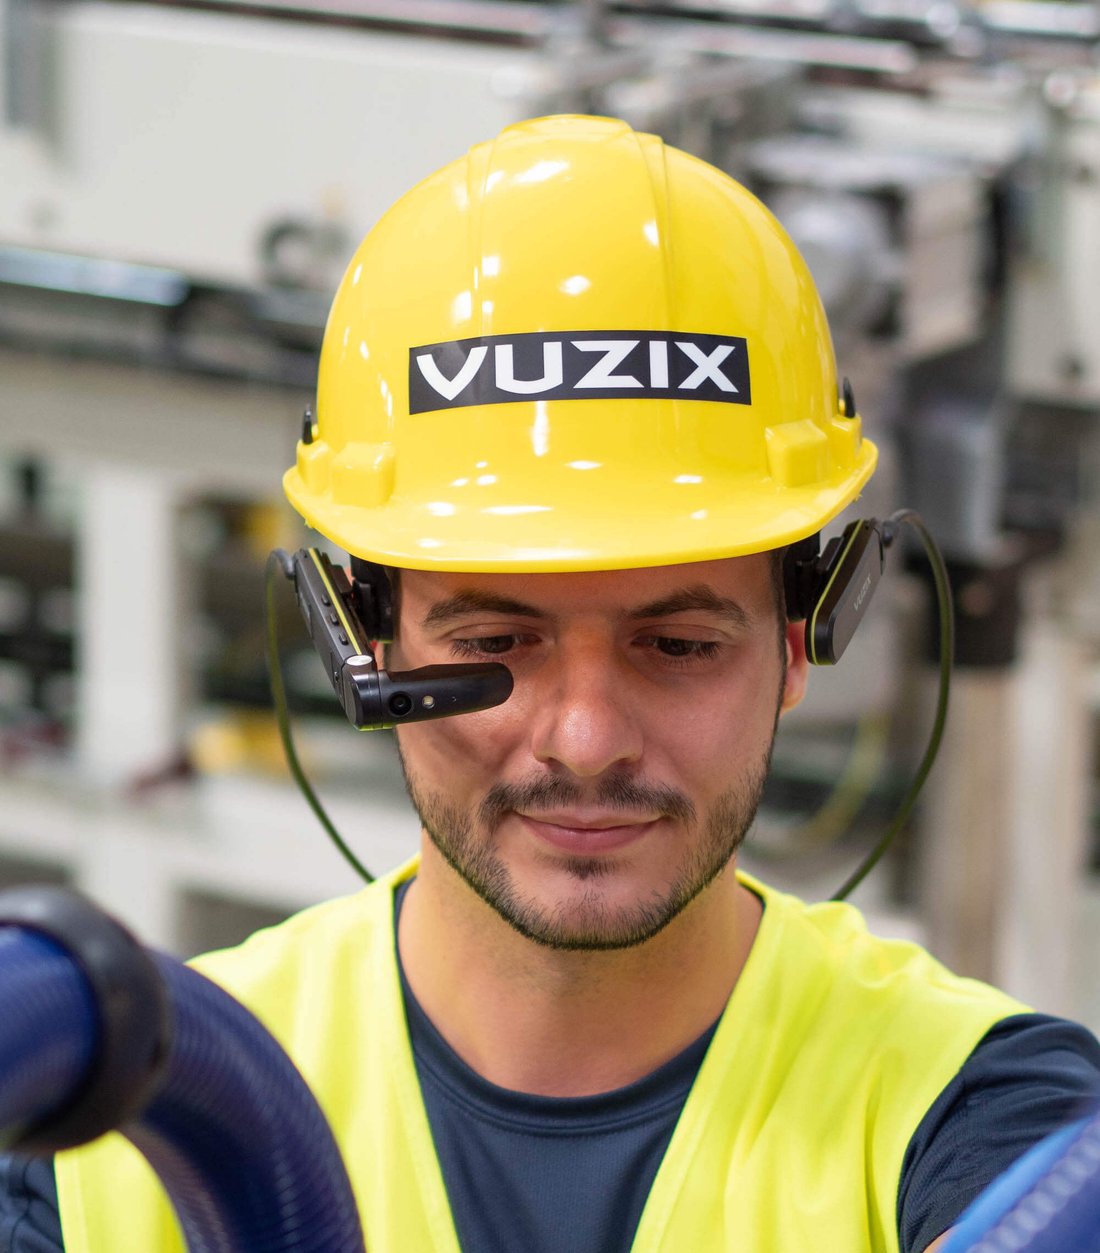 Vuzix on-site worker